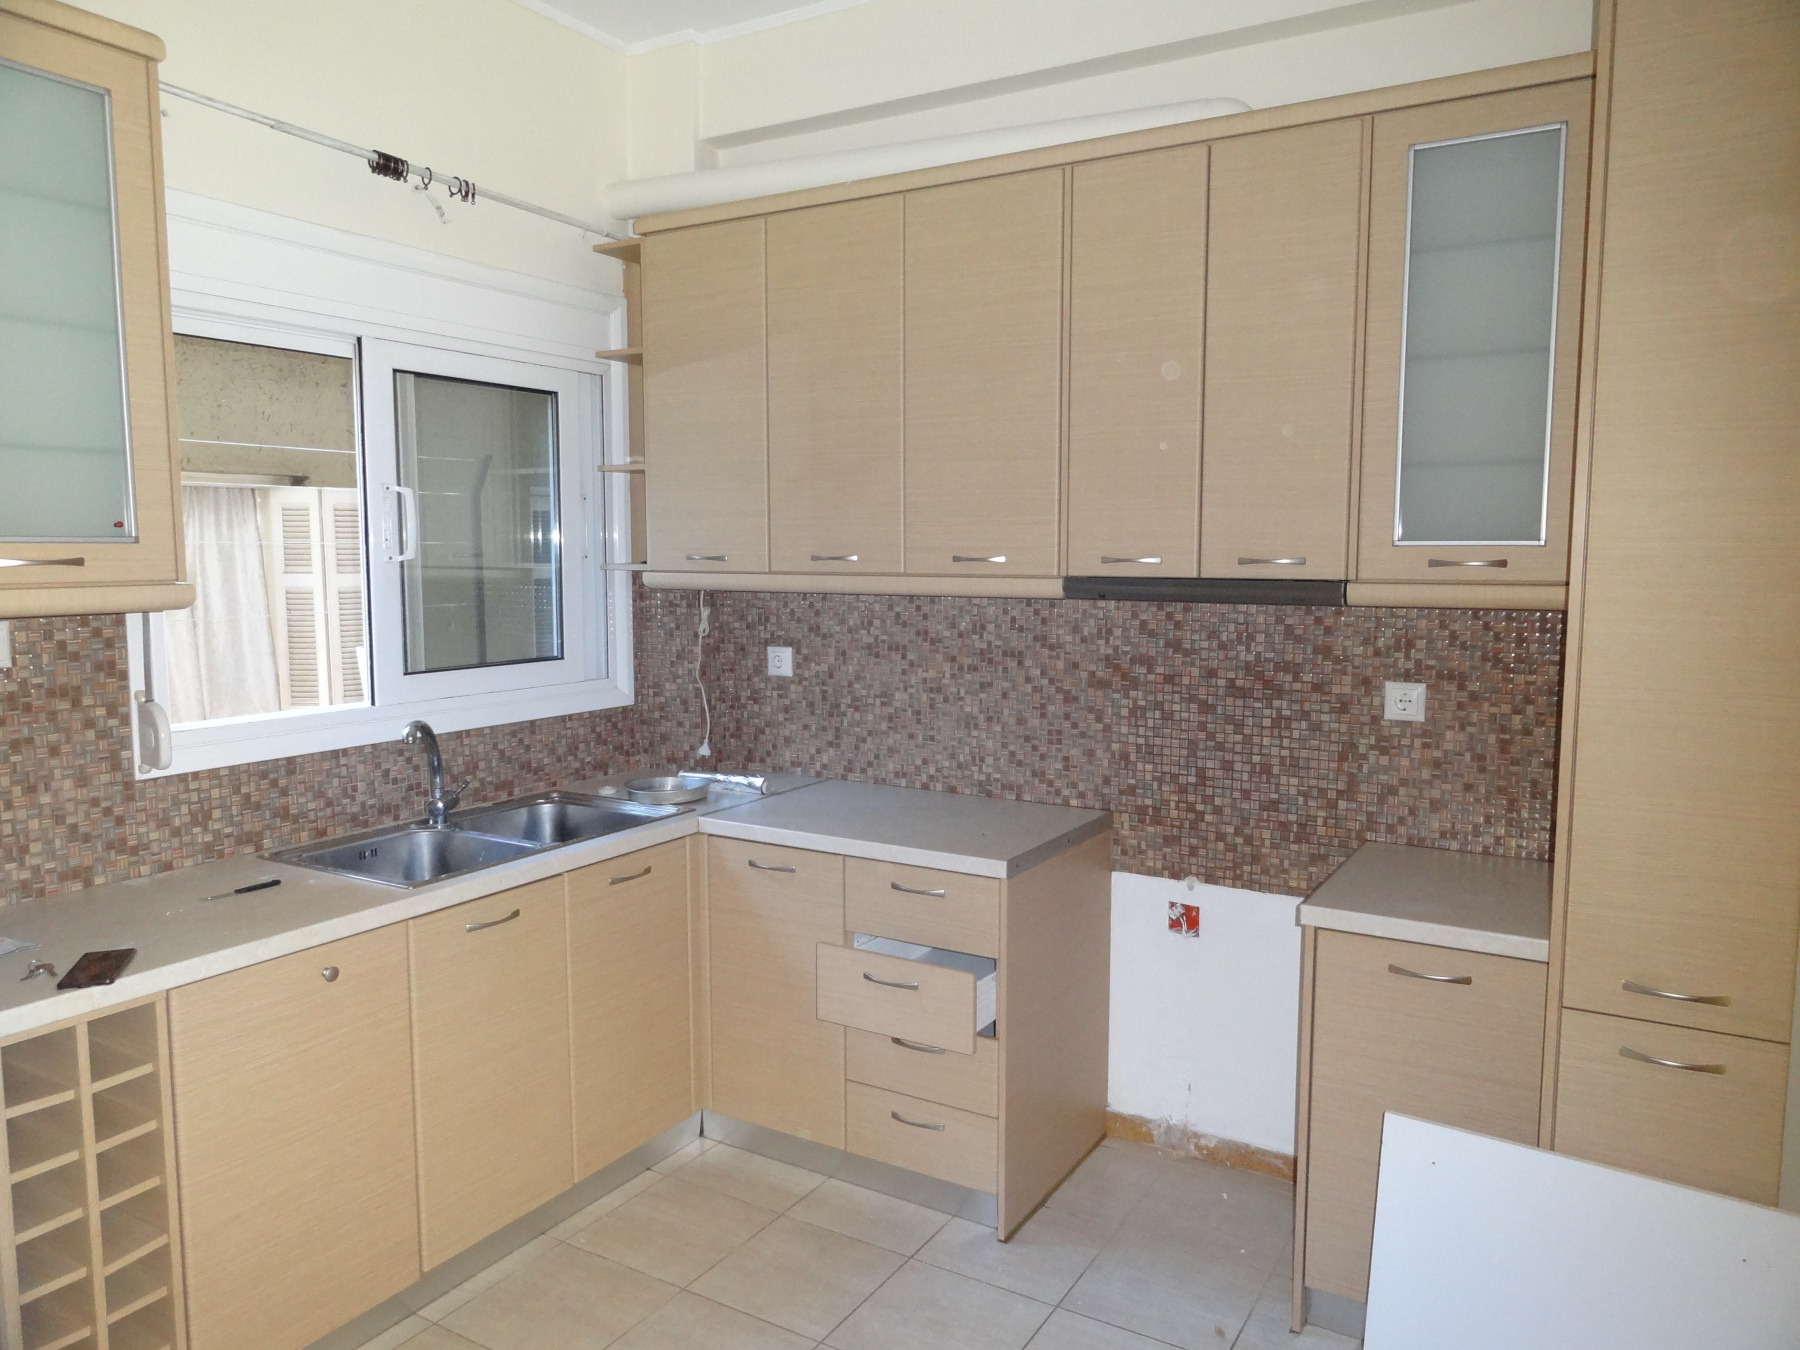 1 bedroom apartment for rent, 49 sq.m. 1st floor in the center of Ioannina in Pargis square